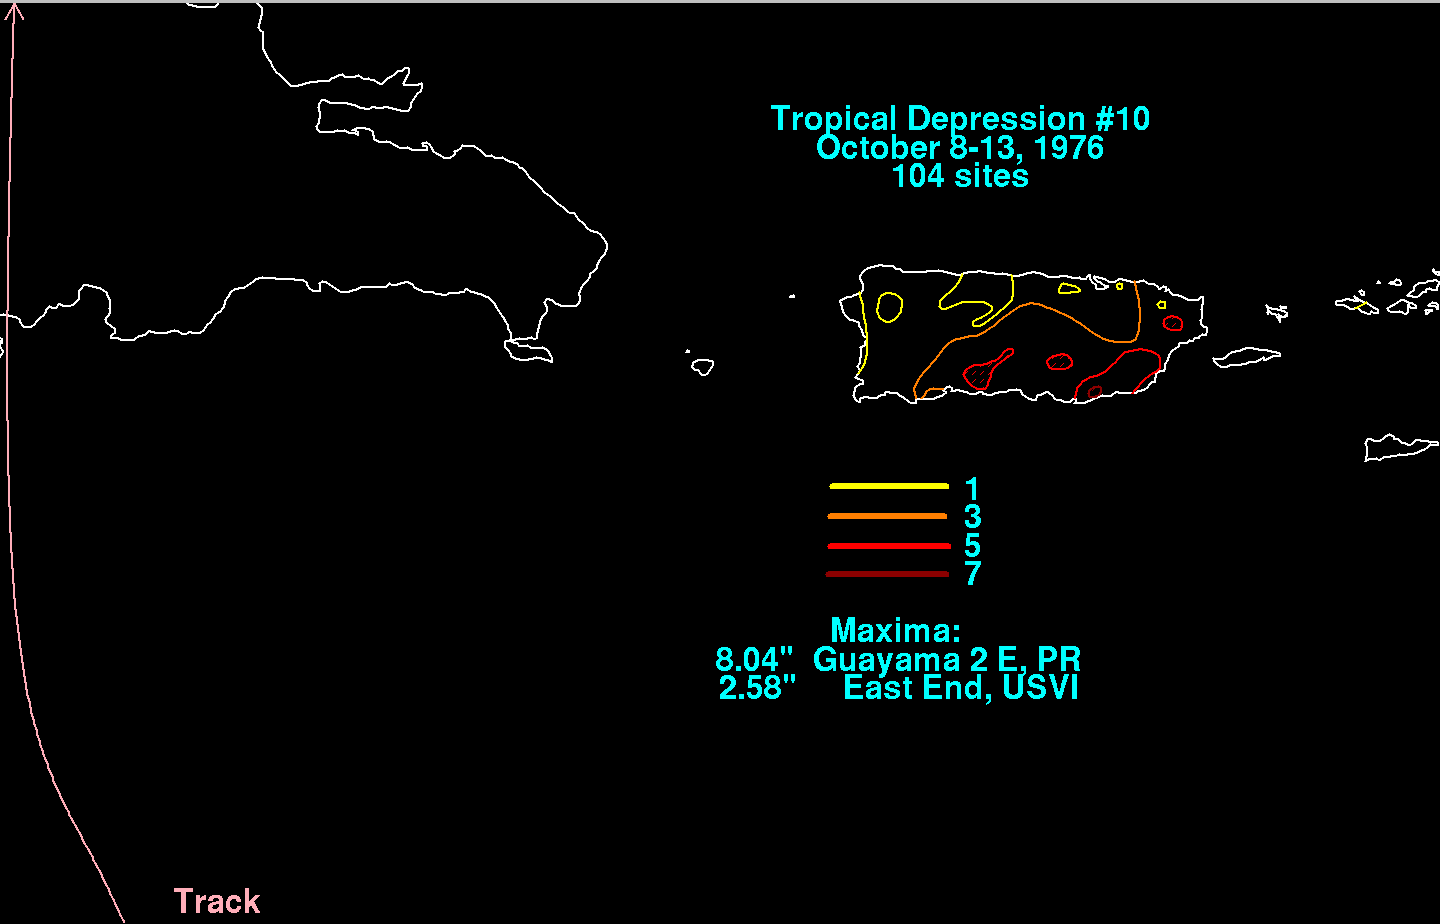 Northeast Caribbean Rainfall Totals for Tropical Depression 10 (1976)